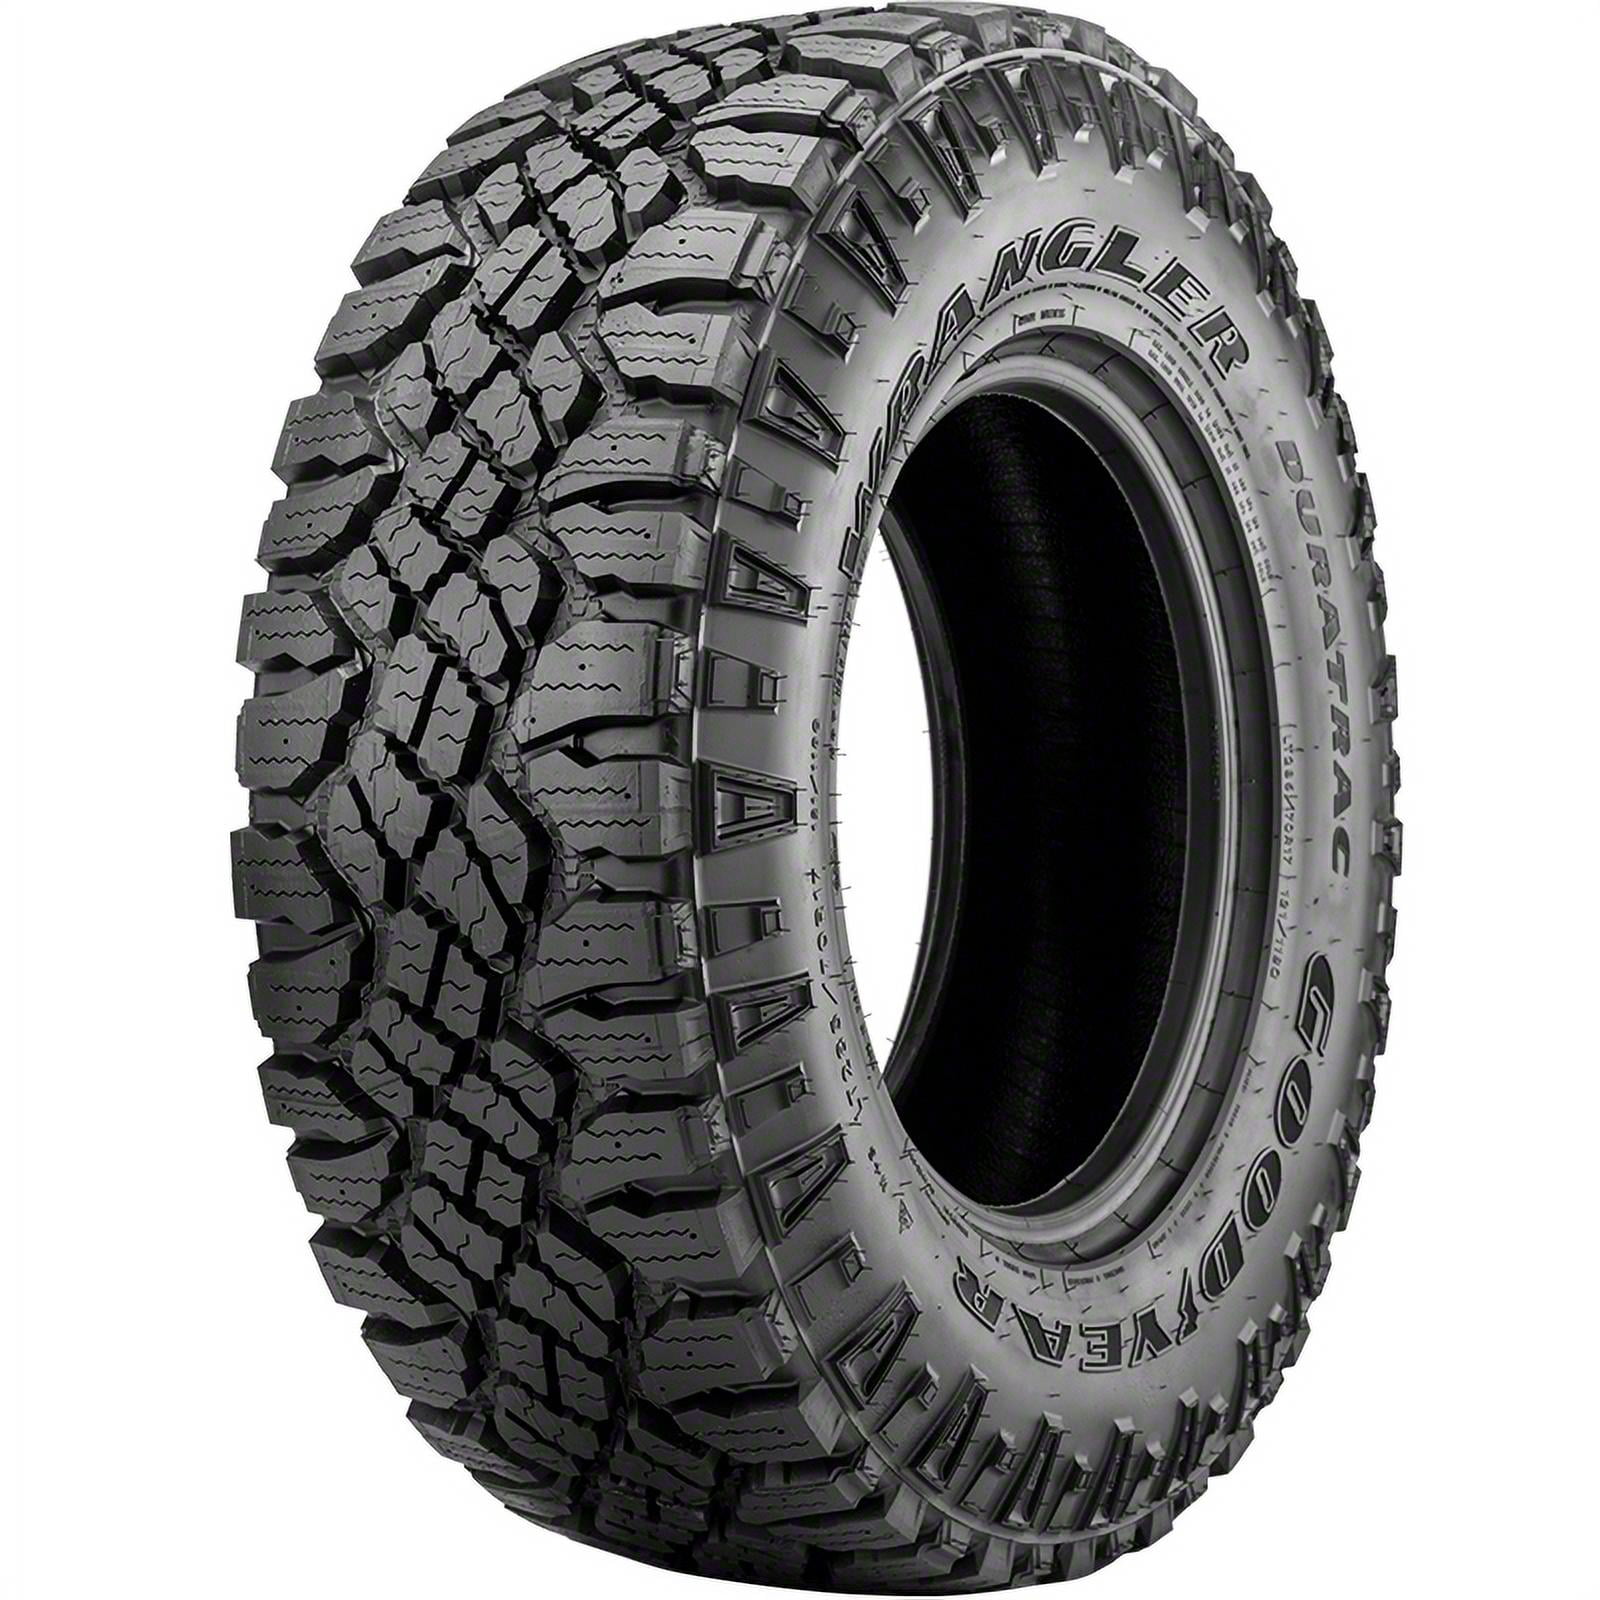 Goodyear wrangler duratrac LT35/12.50R17 121Q bsw all-season tire